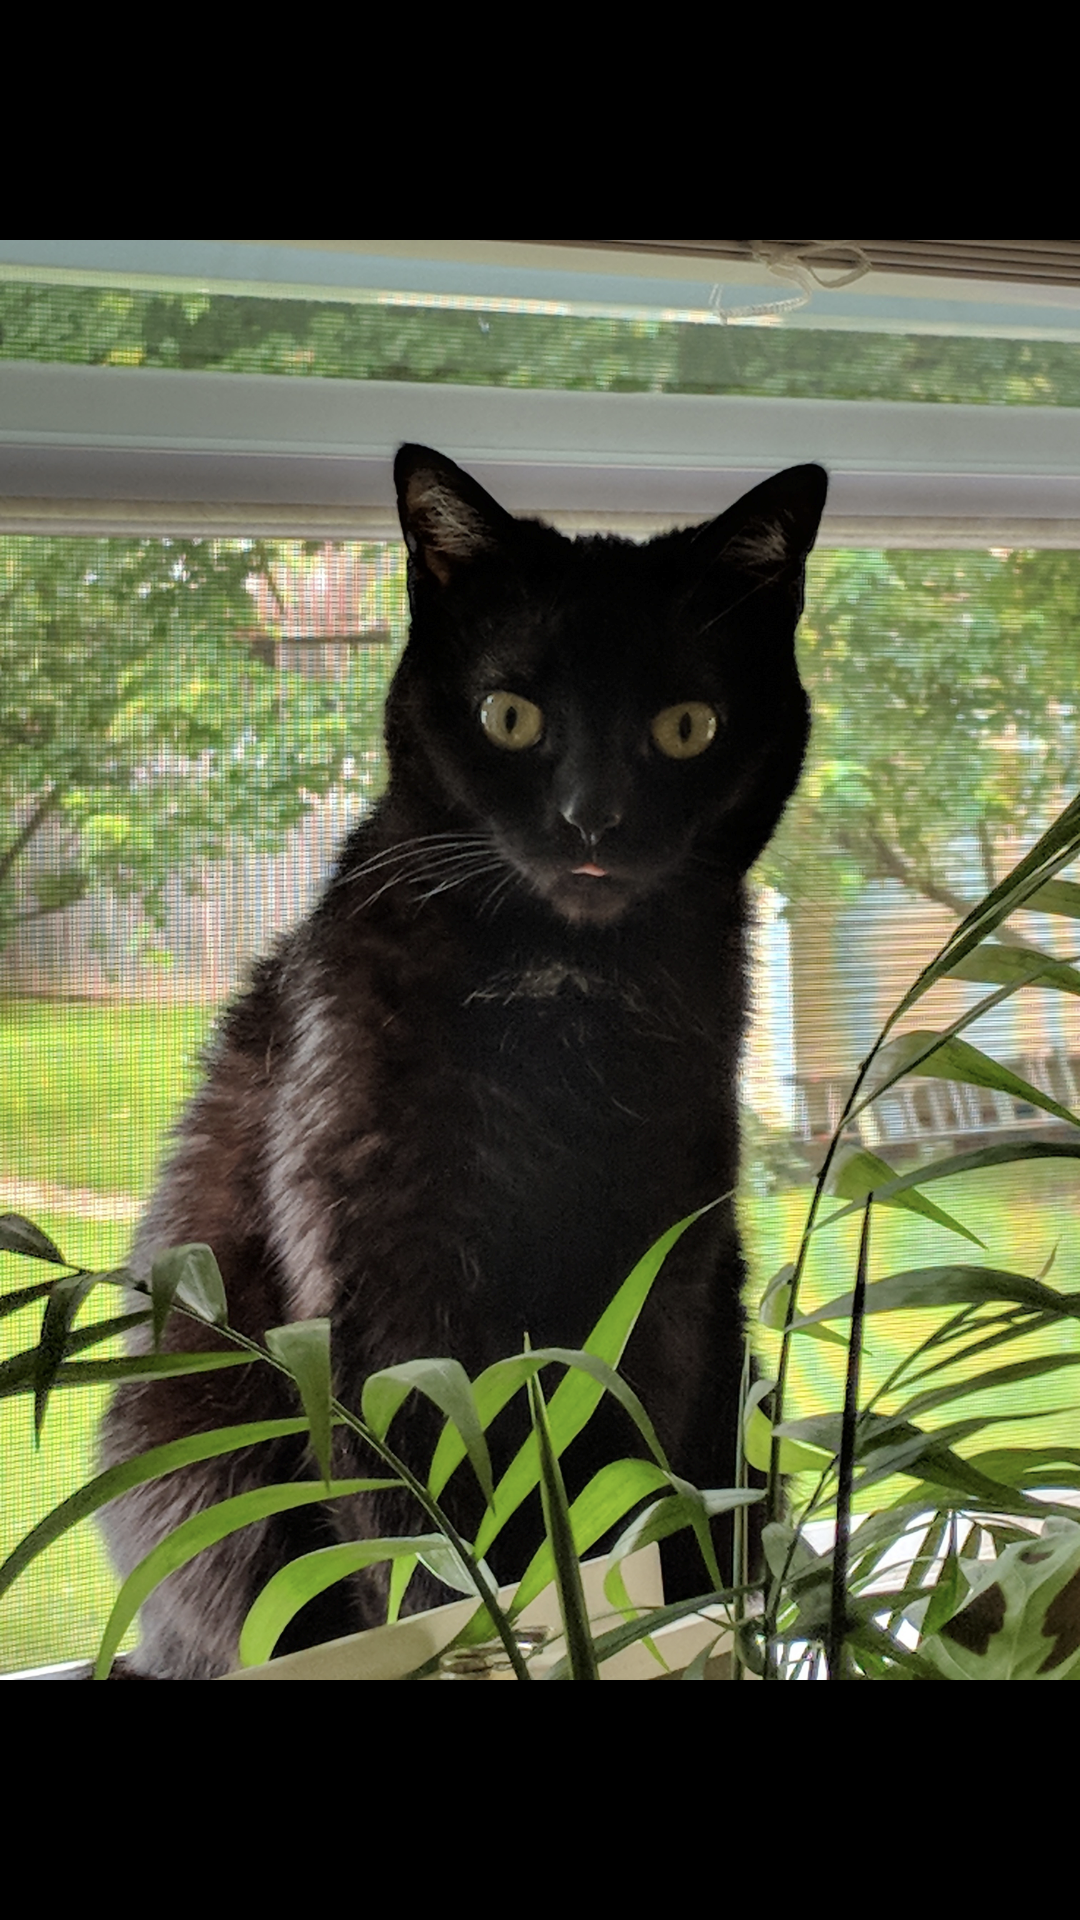 Image of Bella, Lost Cat